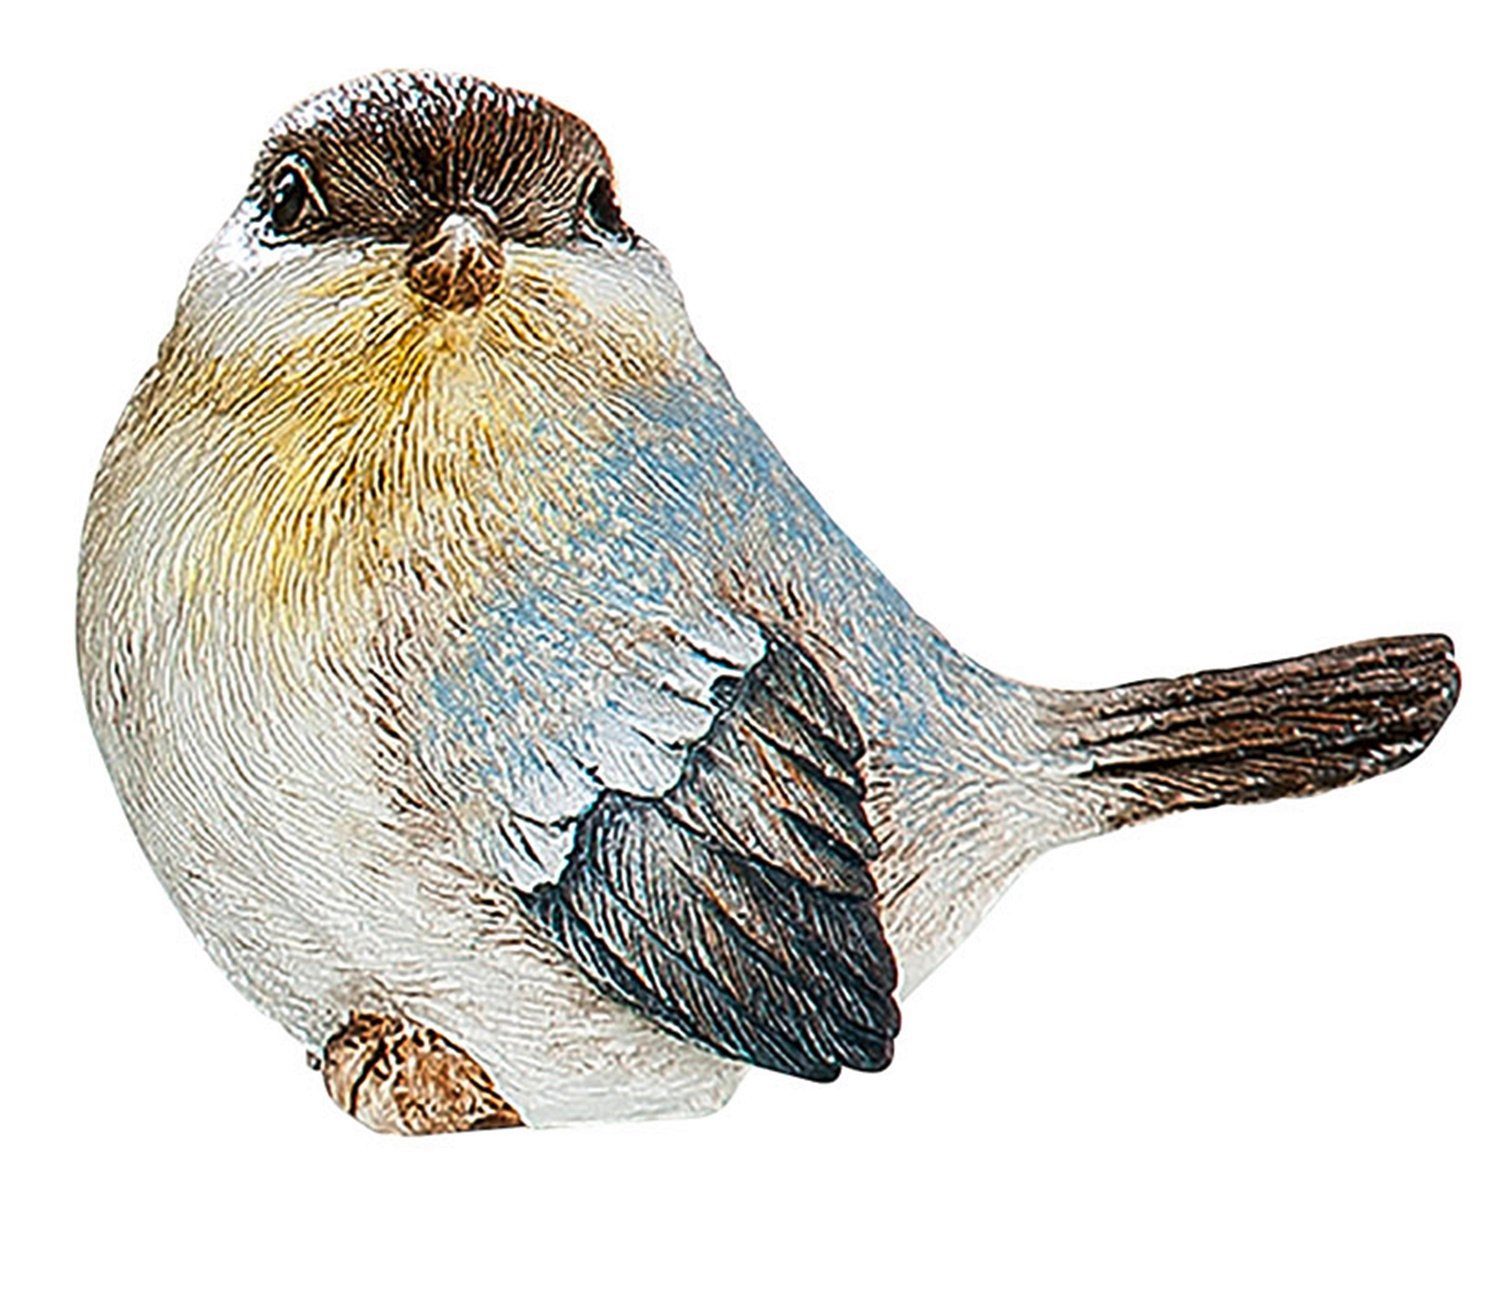 dekojohnson Dekofigur Deko-Vogel Frühlingsdekoration grau blau 5x7x6 cm | Dekofiguren